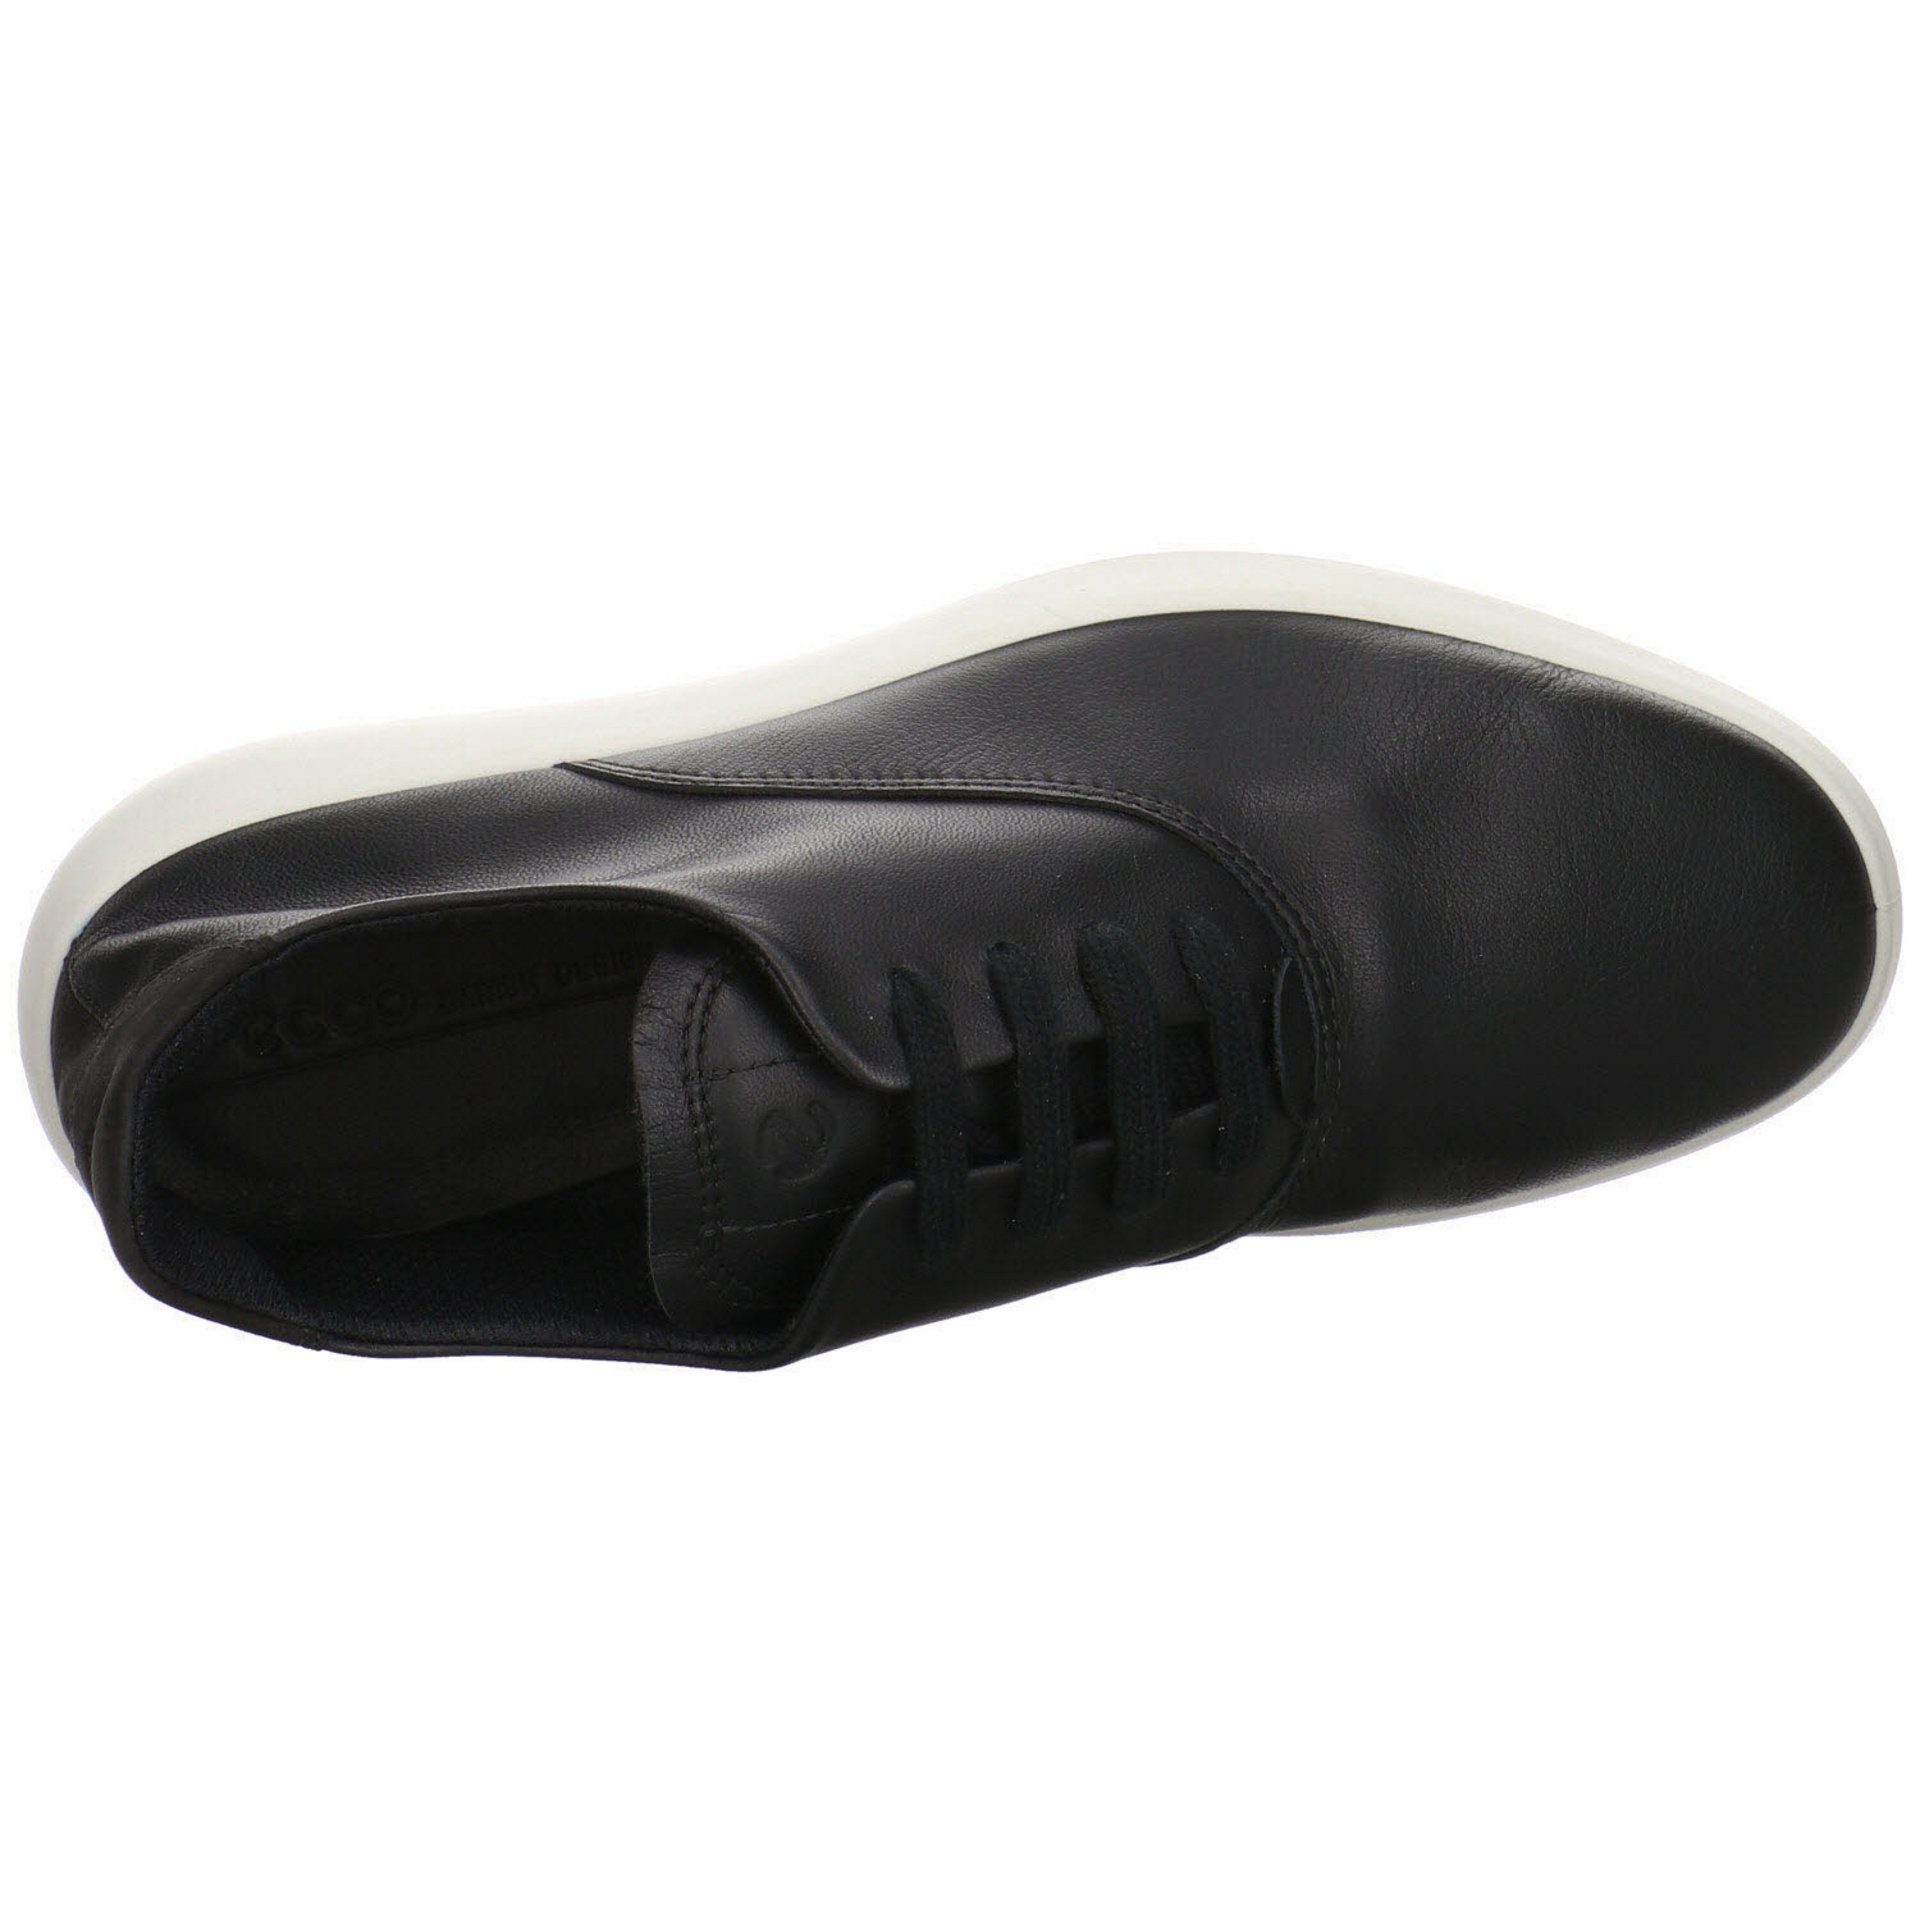 Sneaker Damen Ecco Schuhe Schnürschuh Glattleder BLACK/BLACK Minimalist Sneaker